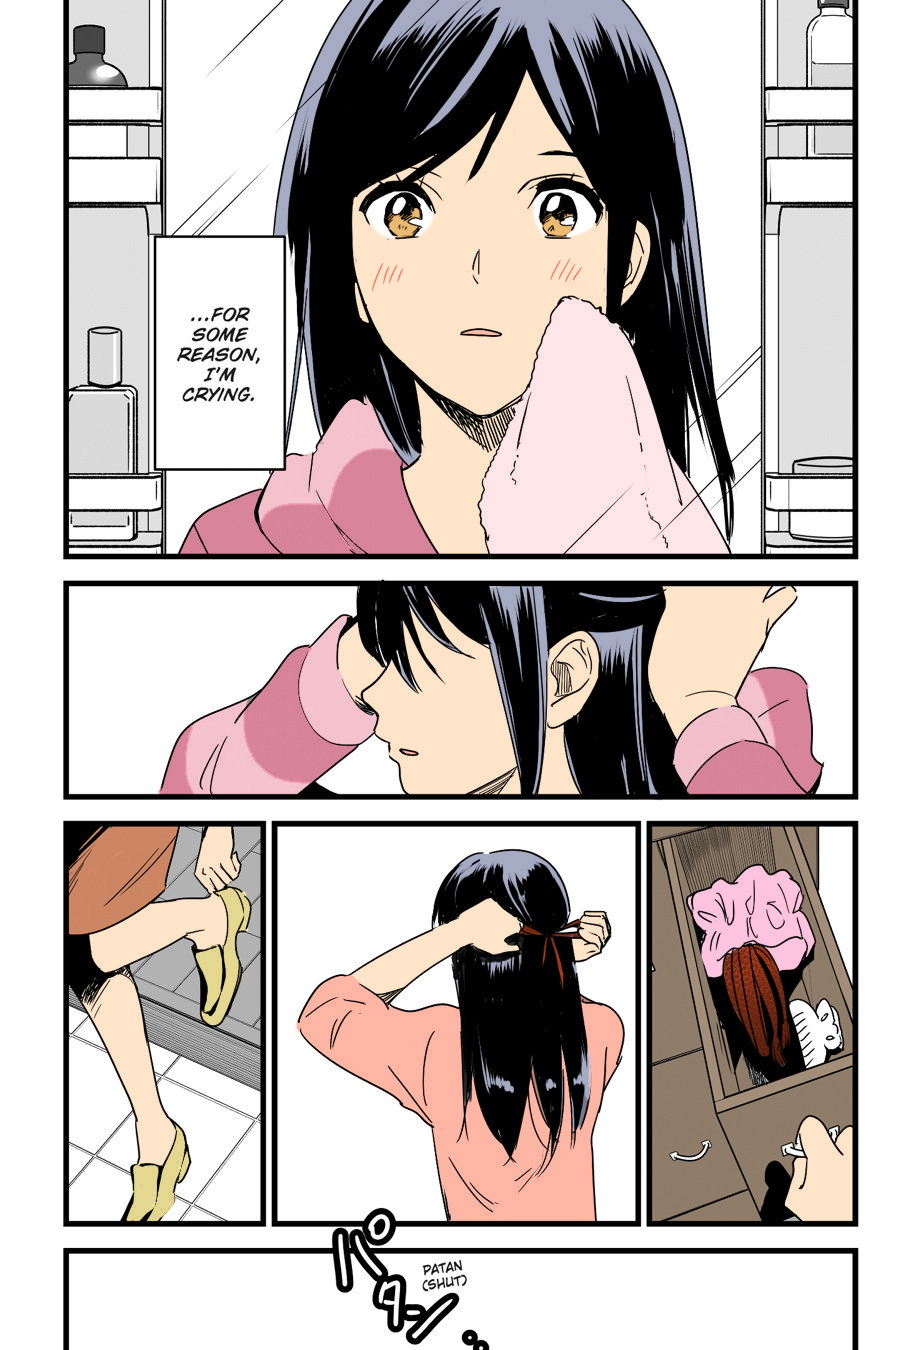 Kimi no na wa : After Story - Mitsuha ~Netorare~ [Syukurin] (Colorized by mikakucoloring) - Page 10